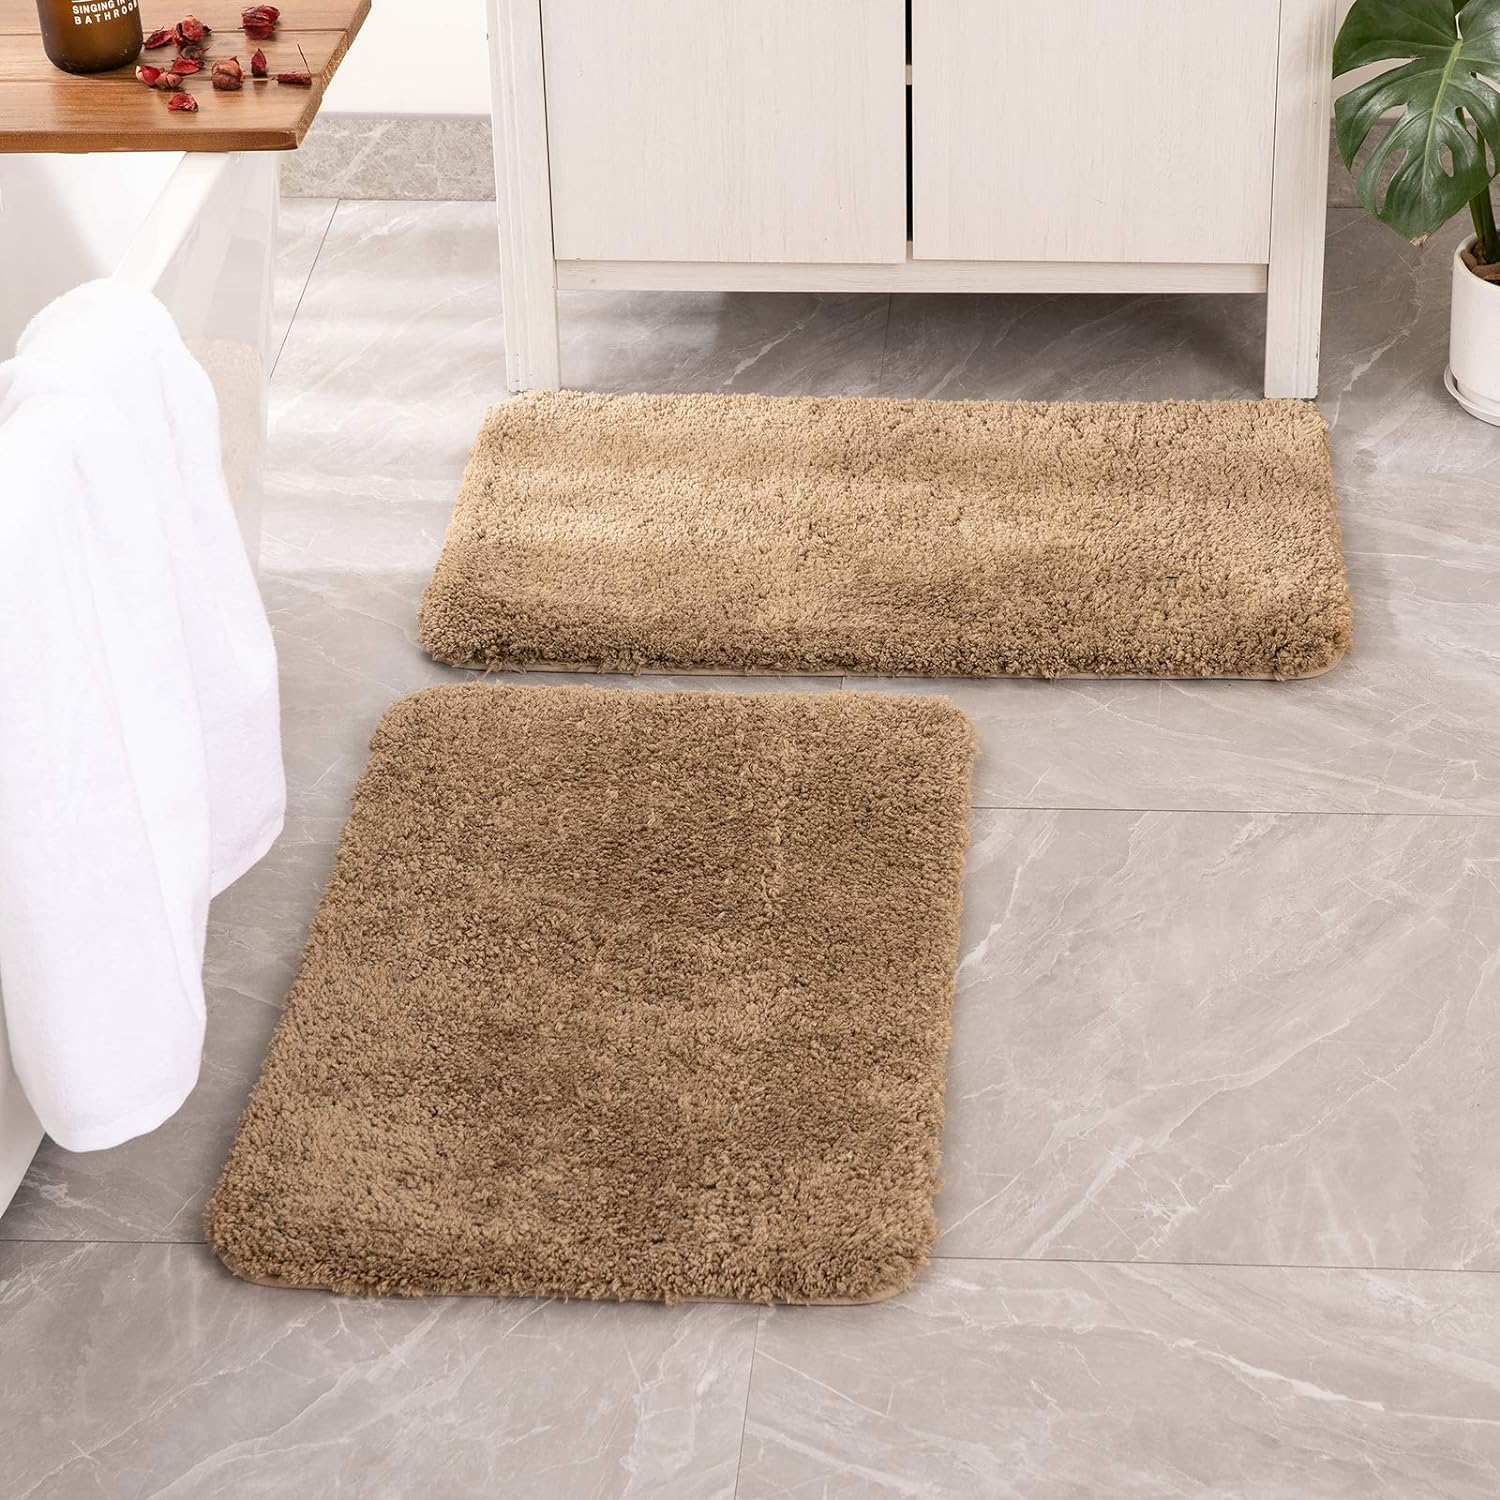 US Non-slip Bath Rugs Soft Mat Shaggy Microfiber Floor Toilet Bathroom Door Mats 